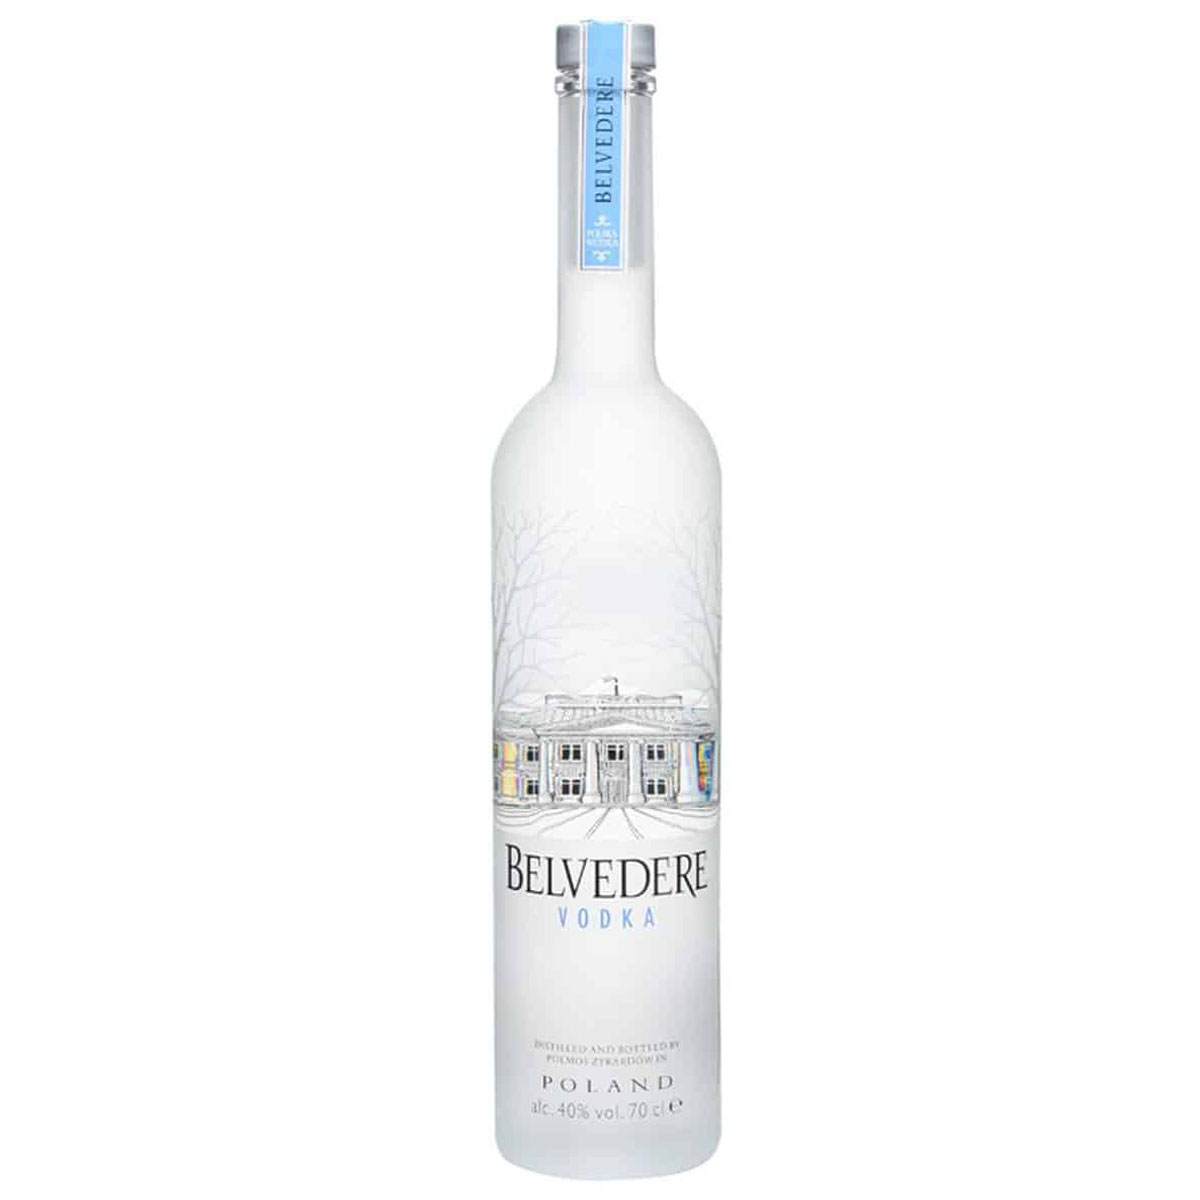 a bottle of belvedere vodka